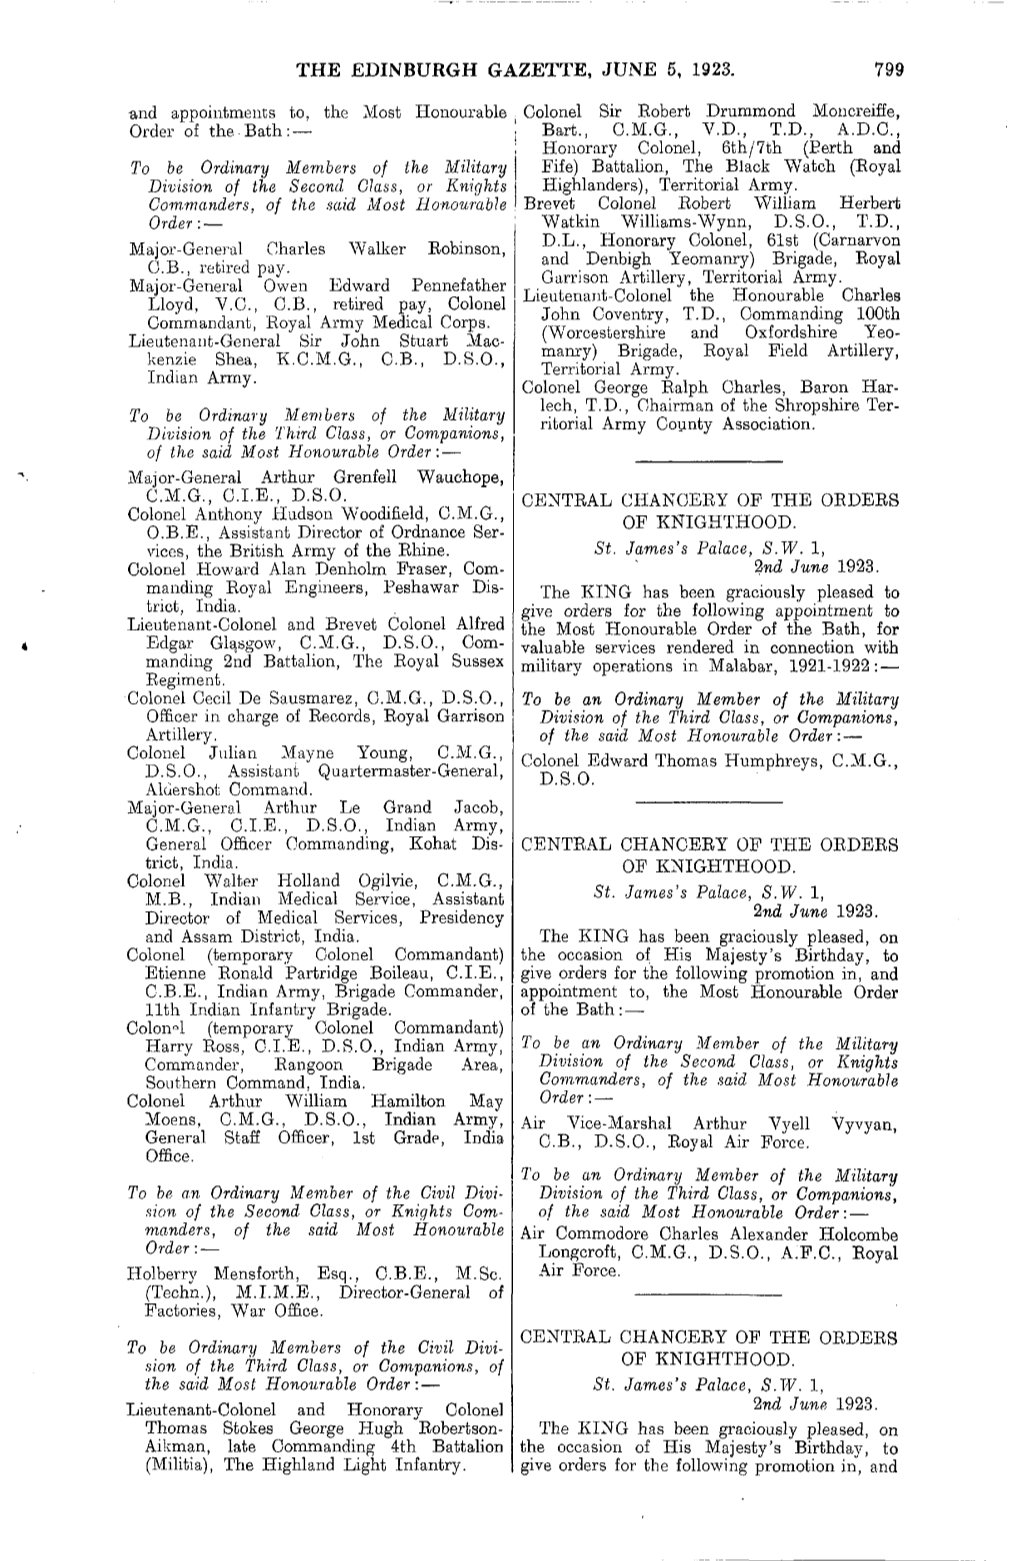 The Edinburgh Gazette, June 5, 1923. Central Chancery Of